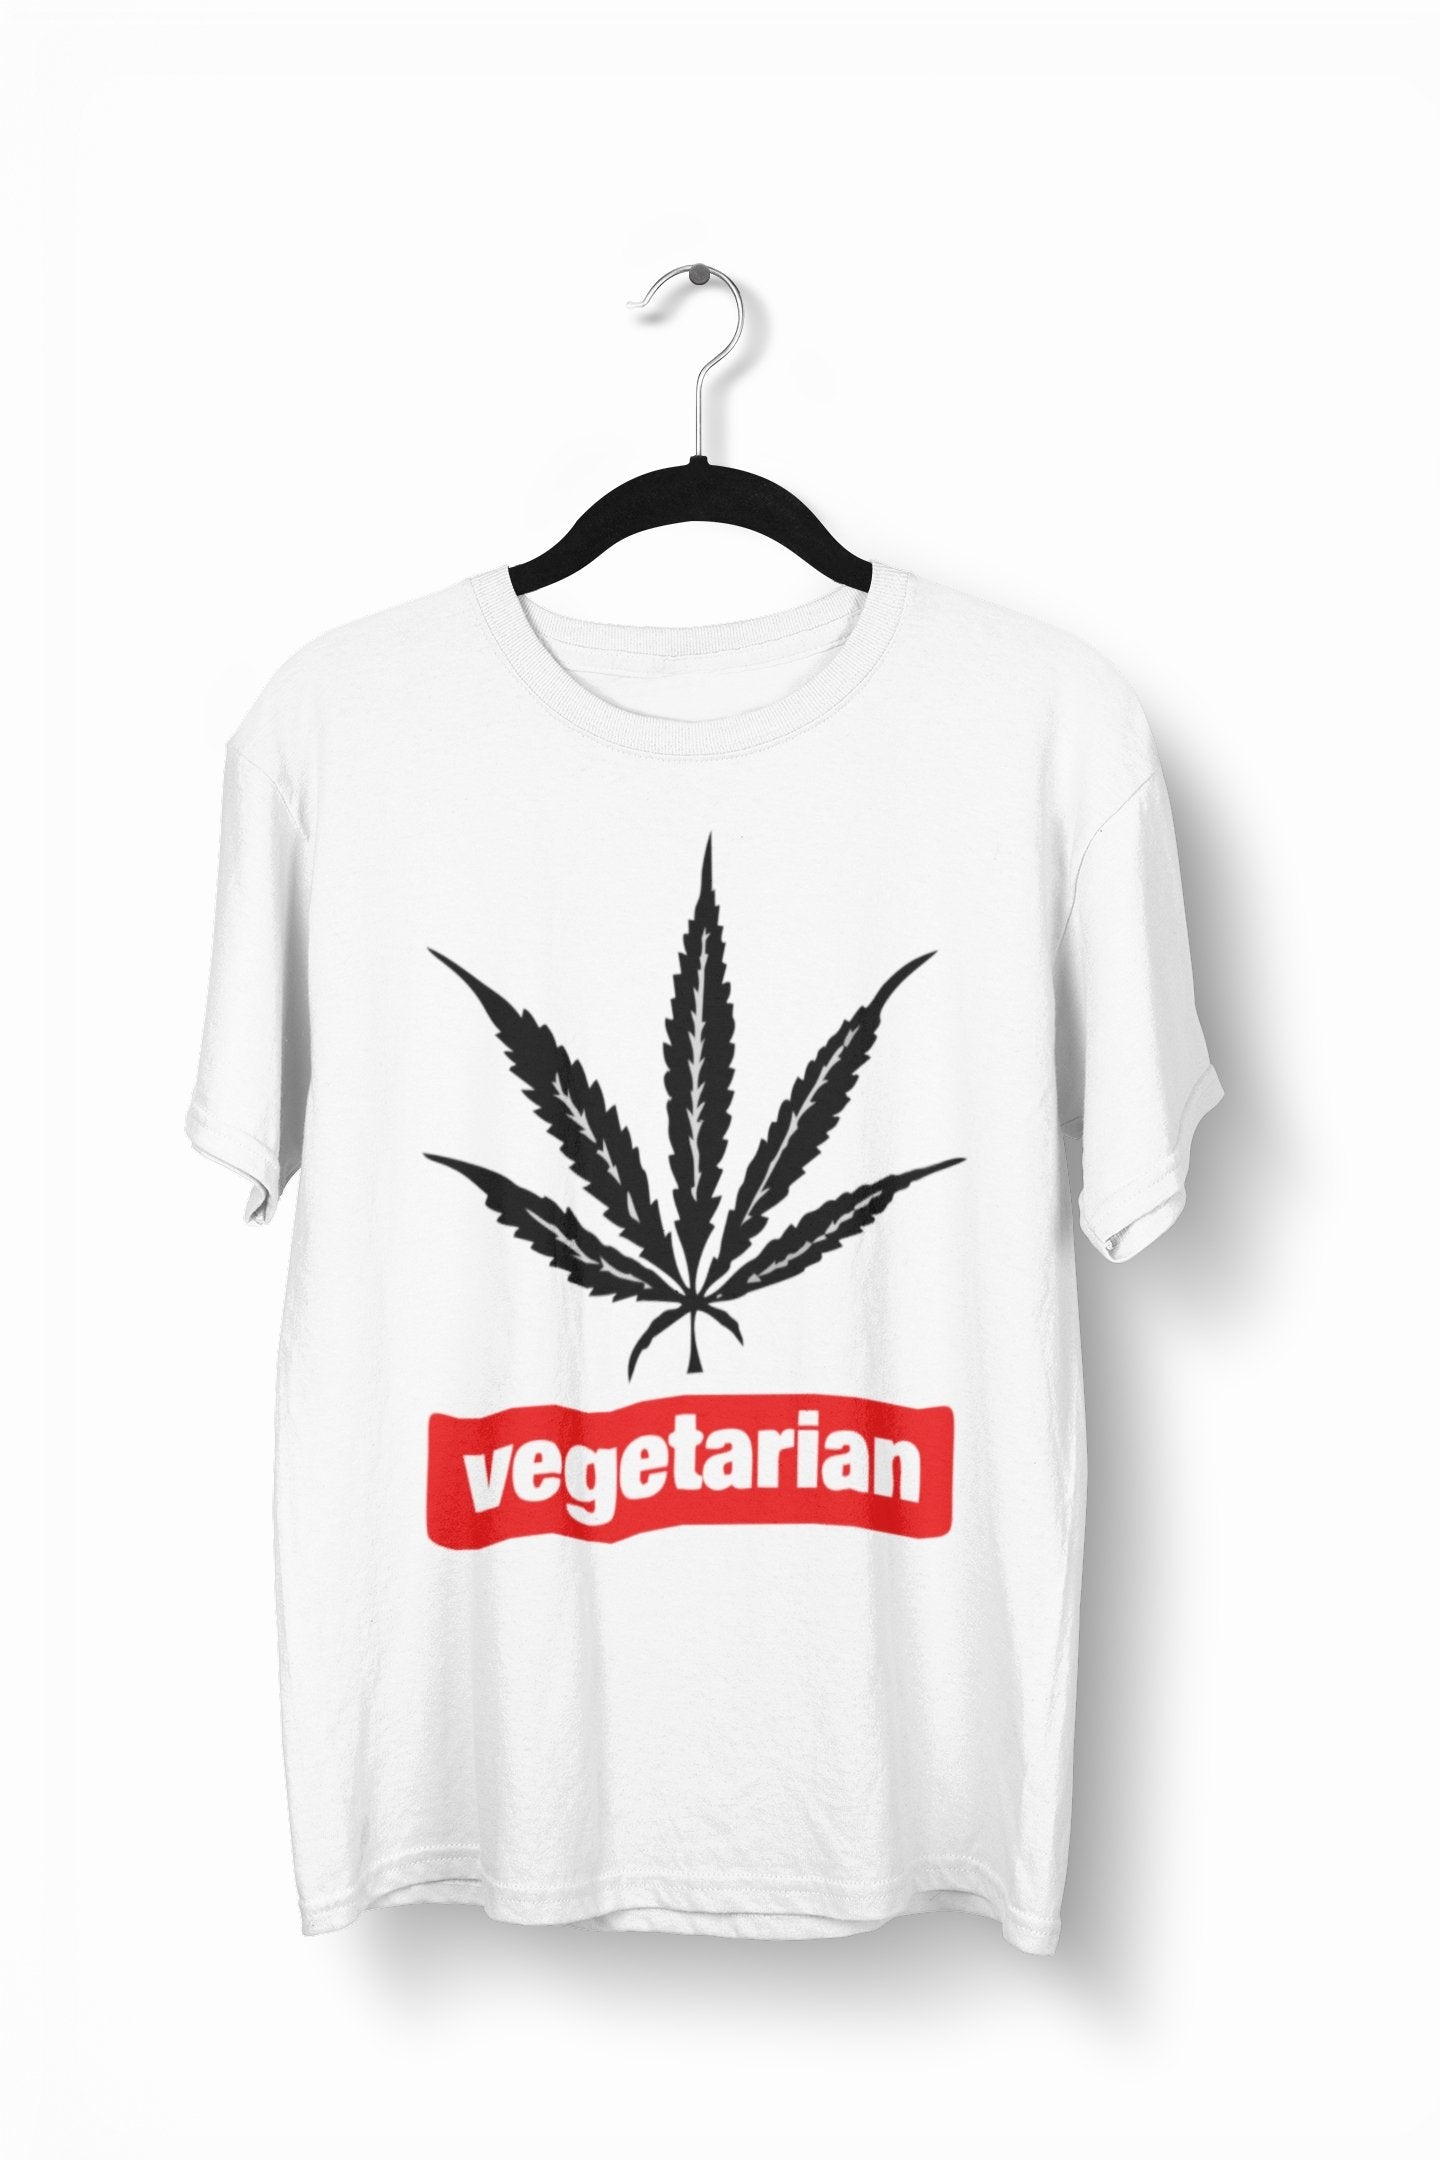 thelegalgang,Stoner Vegetarian Design T shirt,MEN.